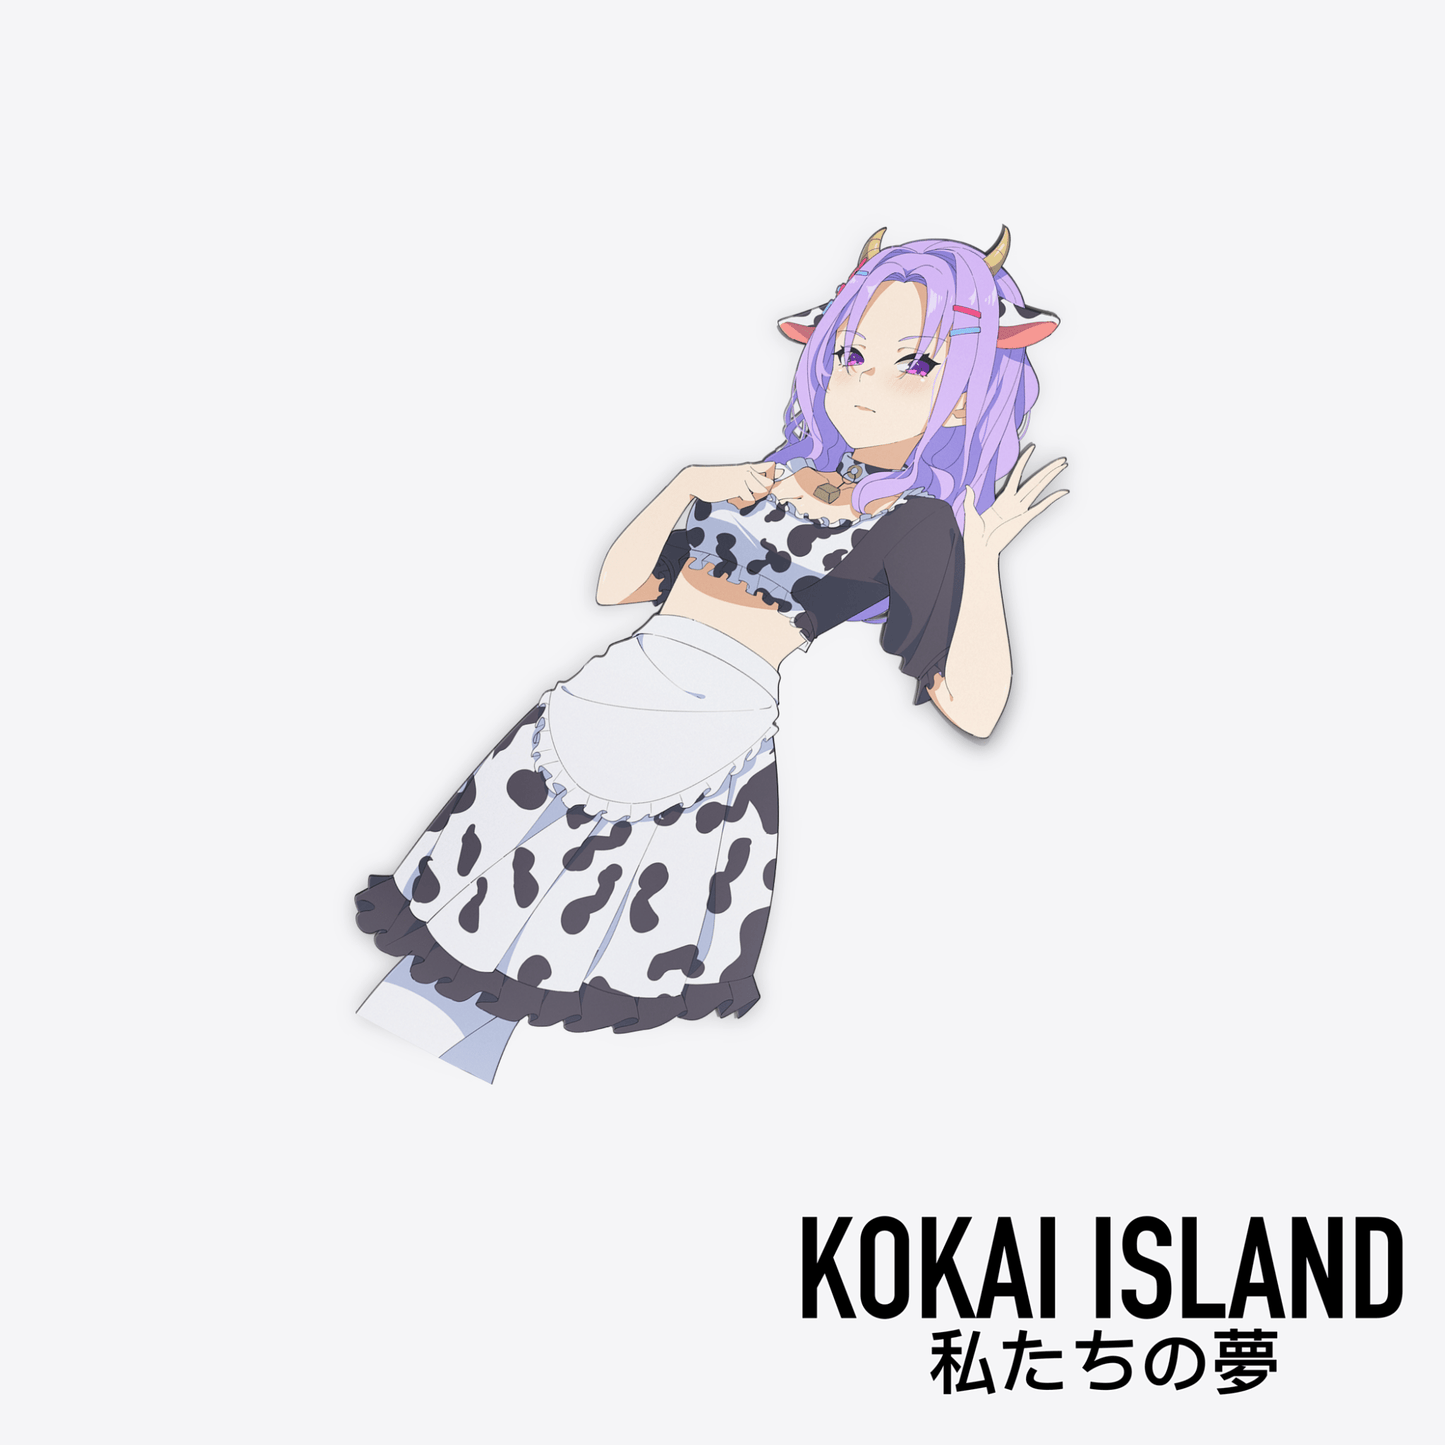 Koko MooMoo DecalDecalKokai Island